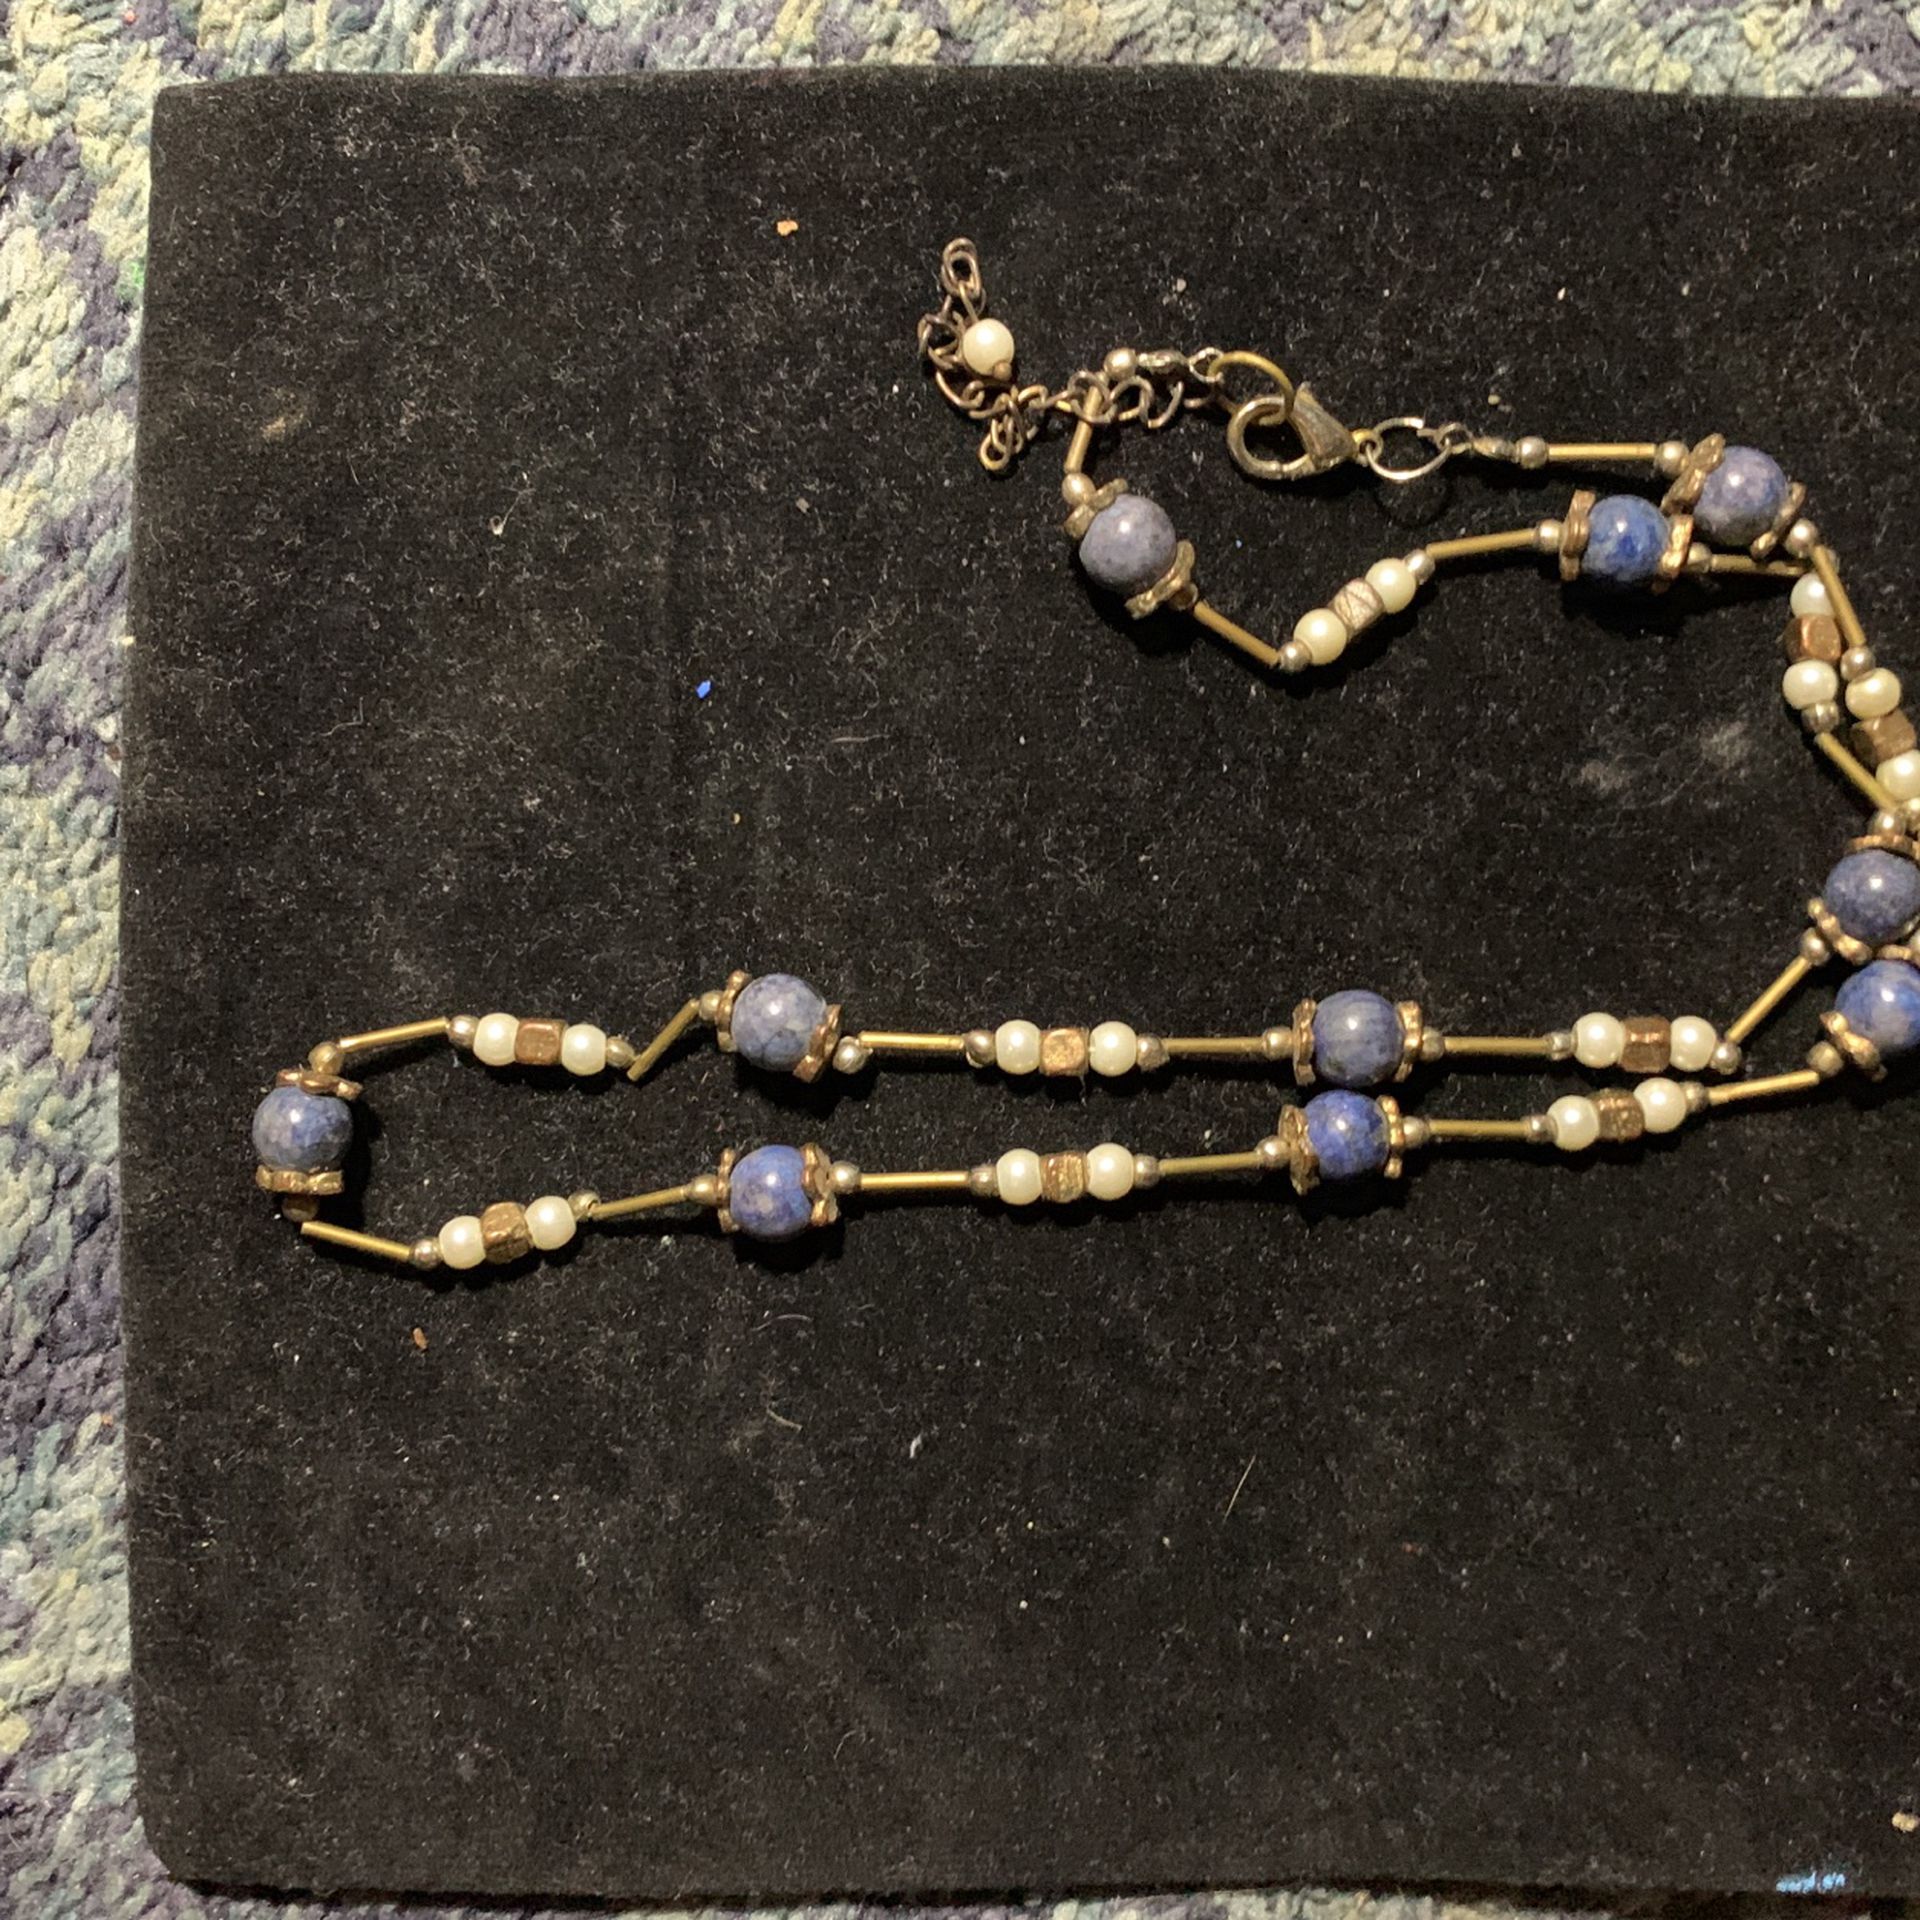 11 inch chain with nice beads